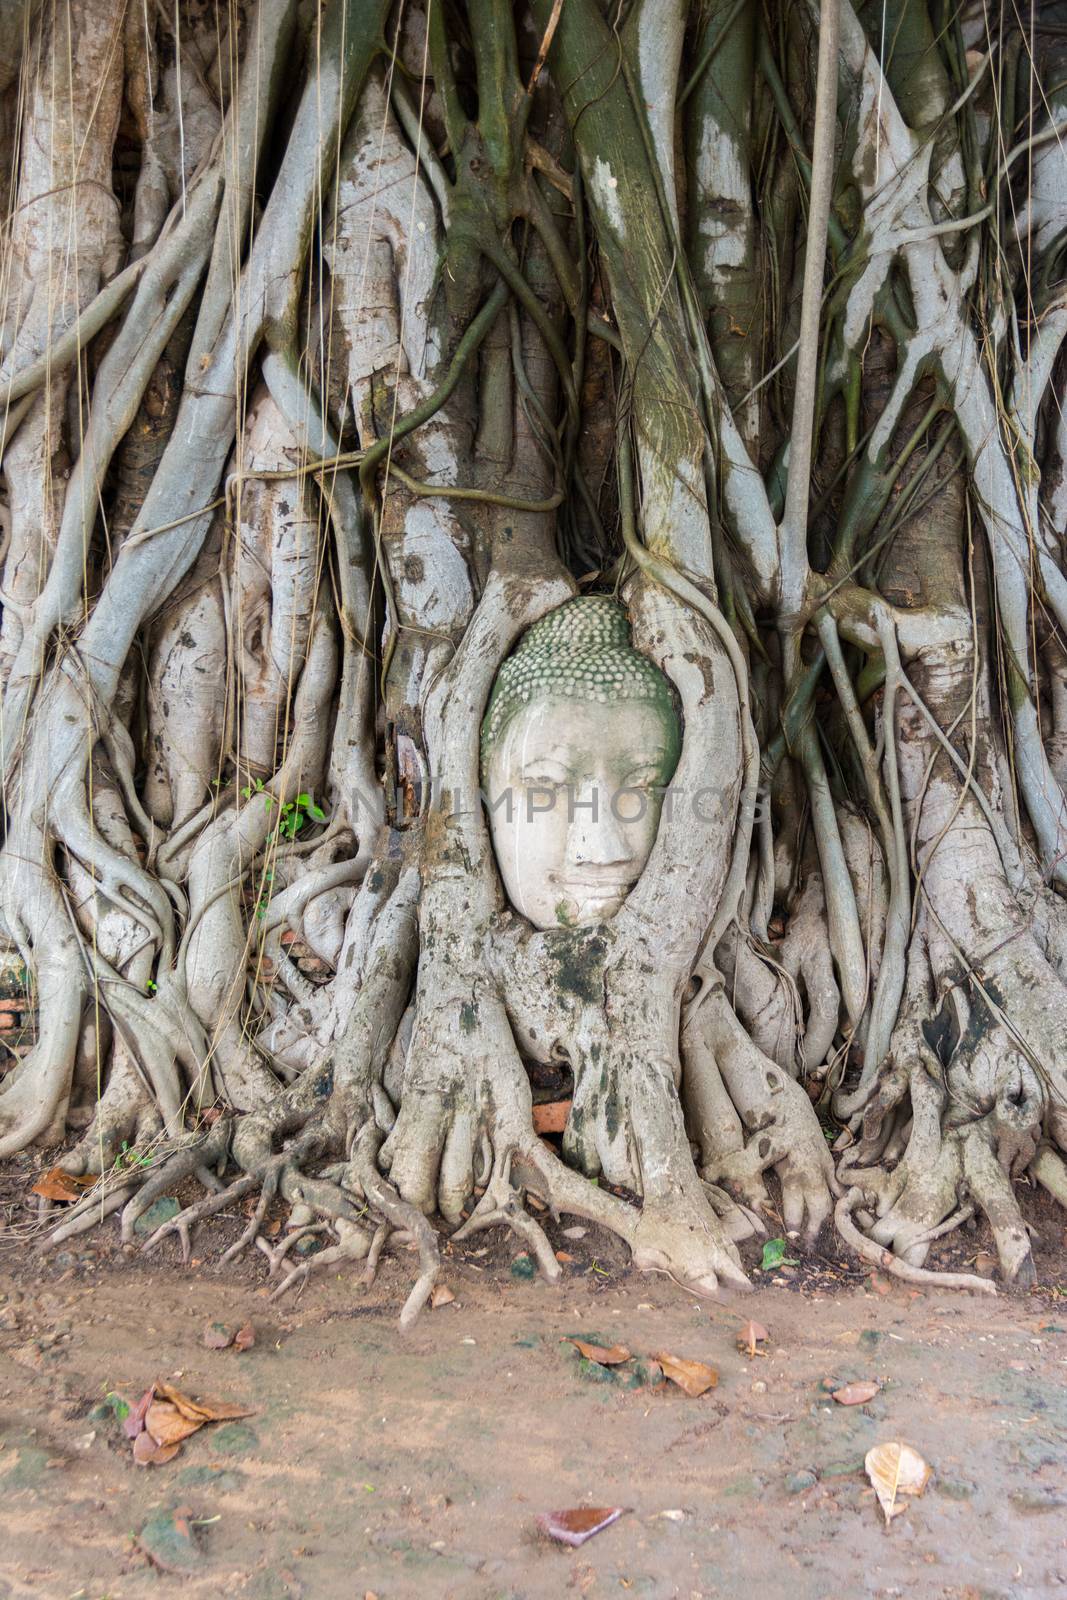 Head of sandstone Buddha in the tree roots. Wat Phra Mahathat, Ayutthaya, Thailand